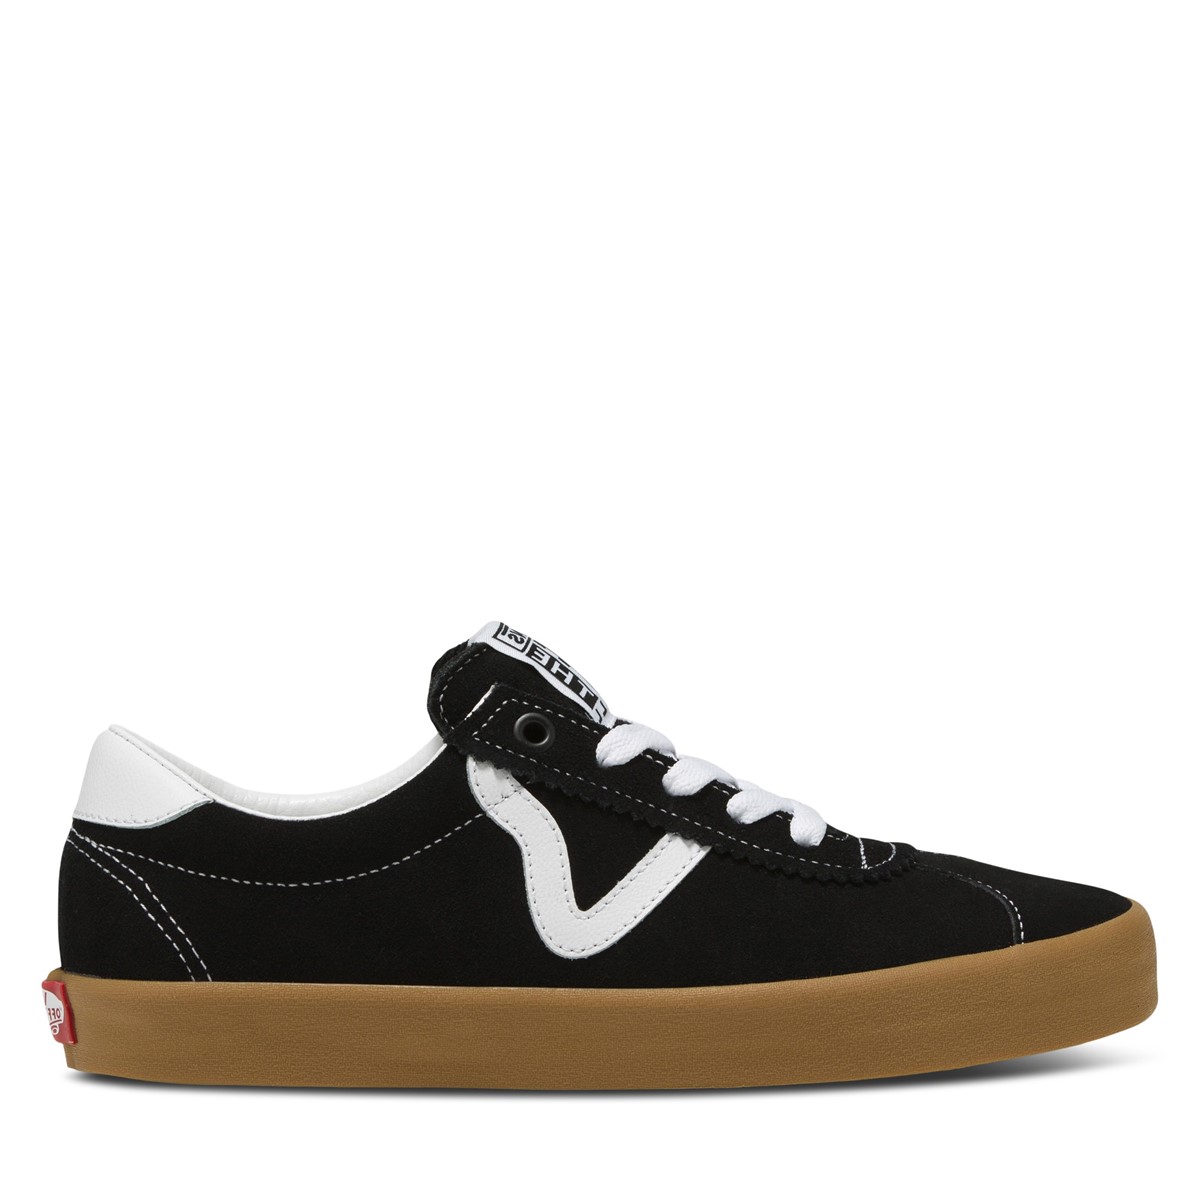 Sport Low Sneakers in Black/White/Gum